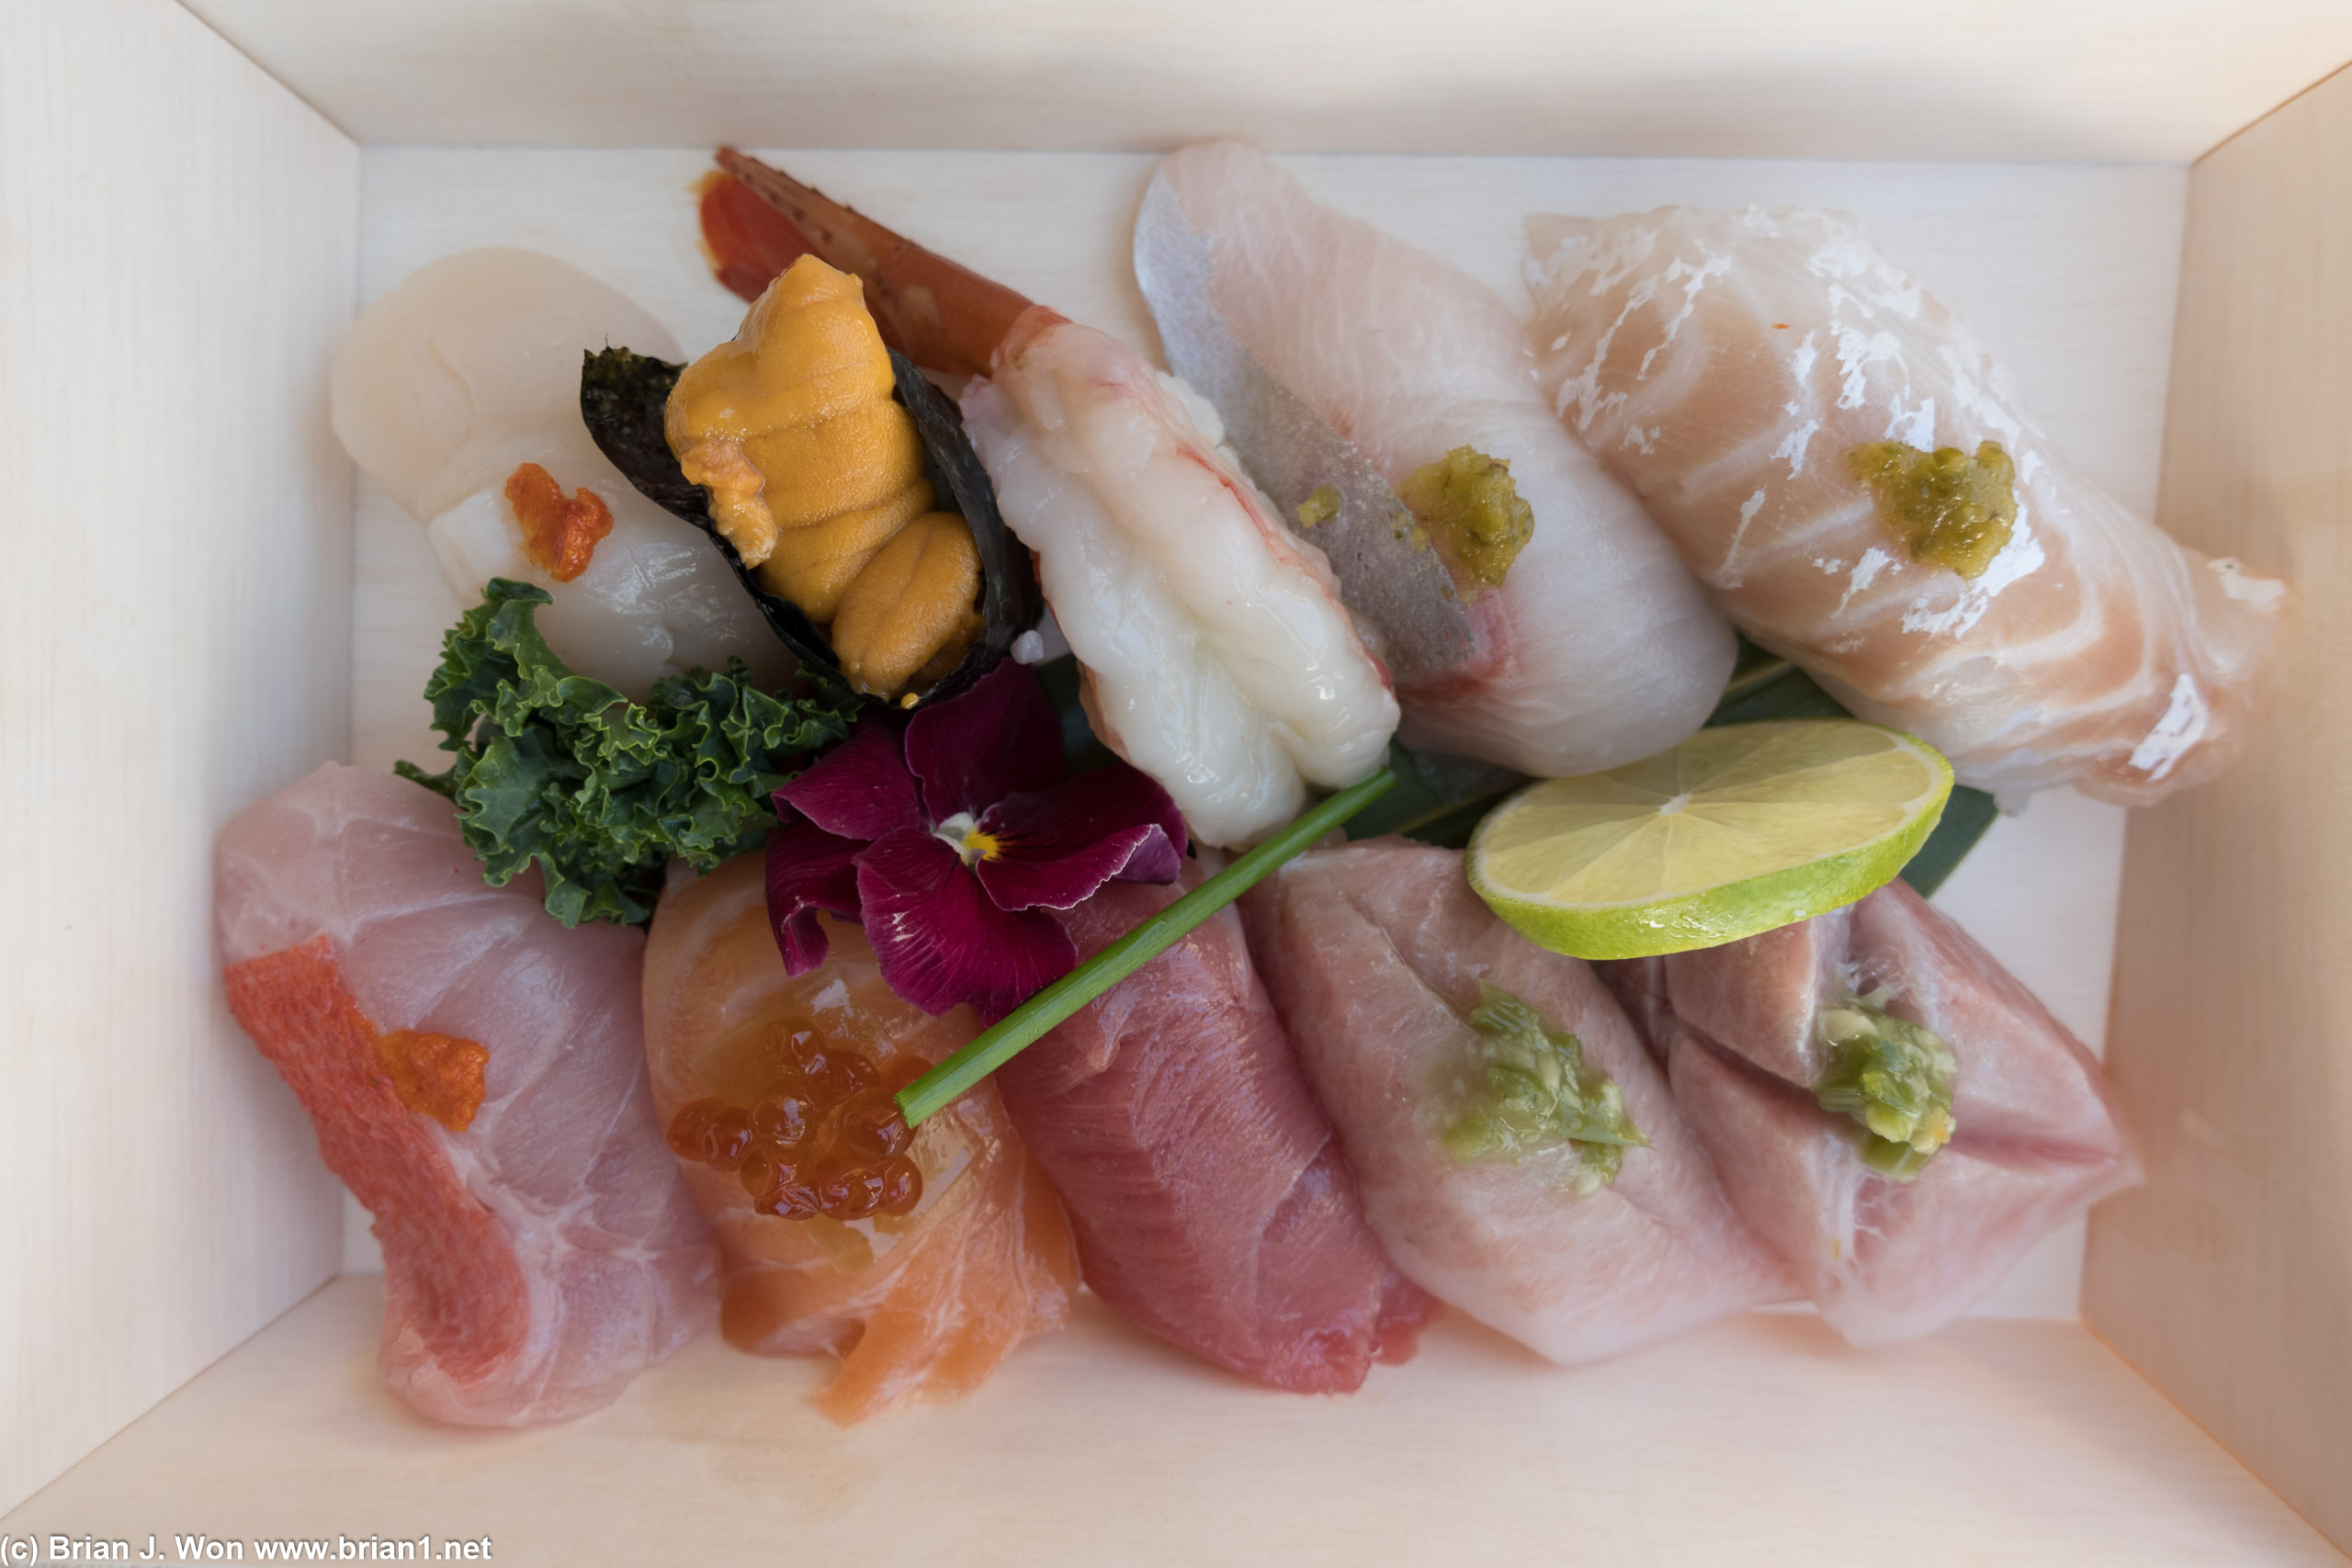 Splurged on the higher-end "omakase" sushi set.